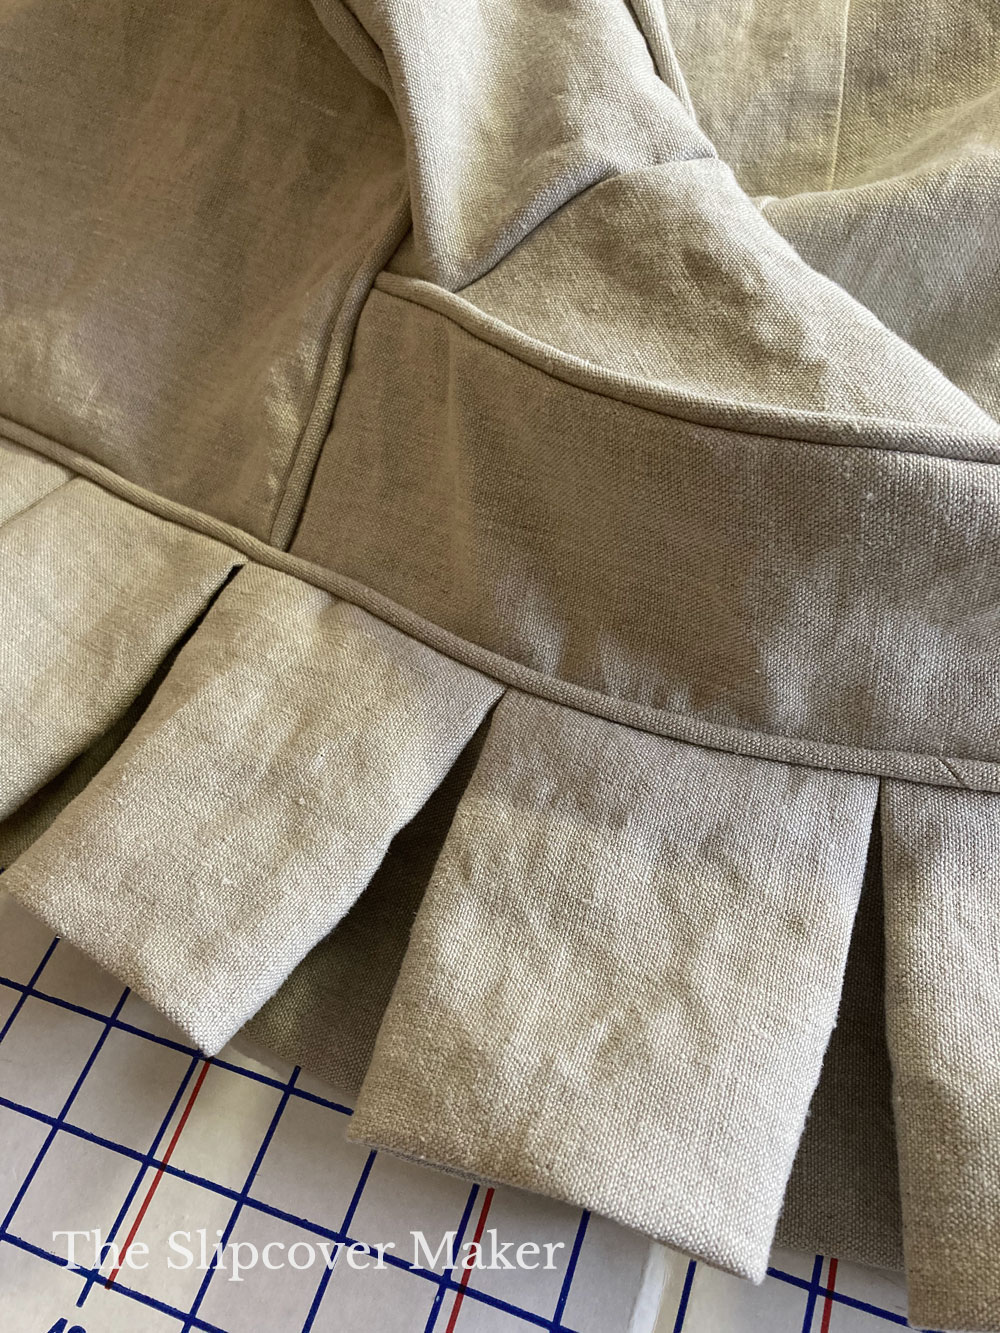 5 Pleated Slipcover Skirt Designs + Lining Tips